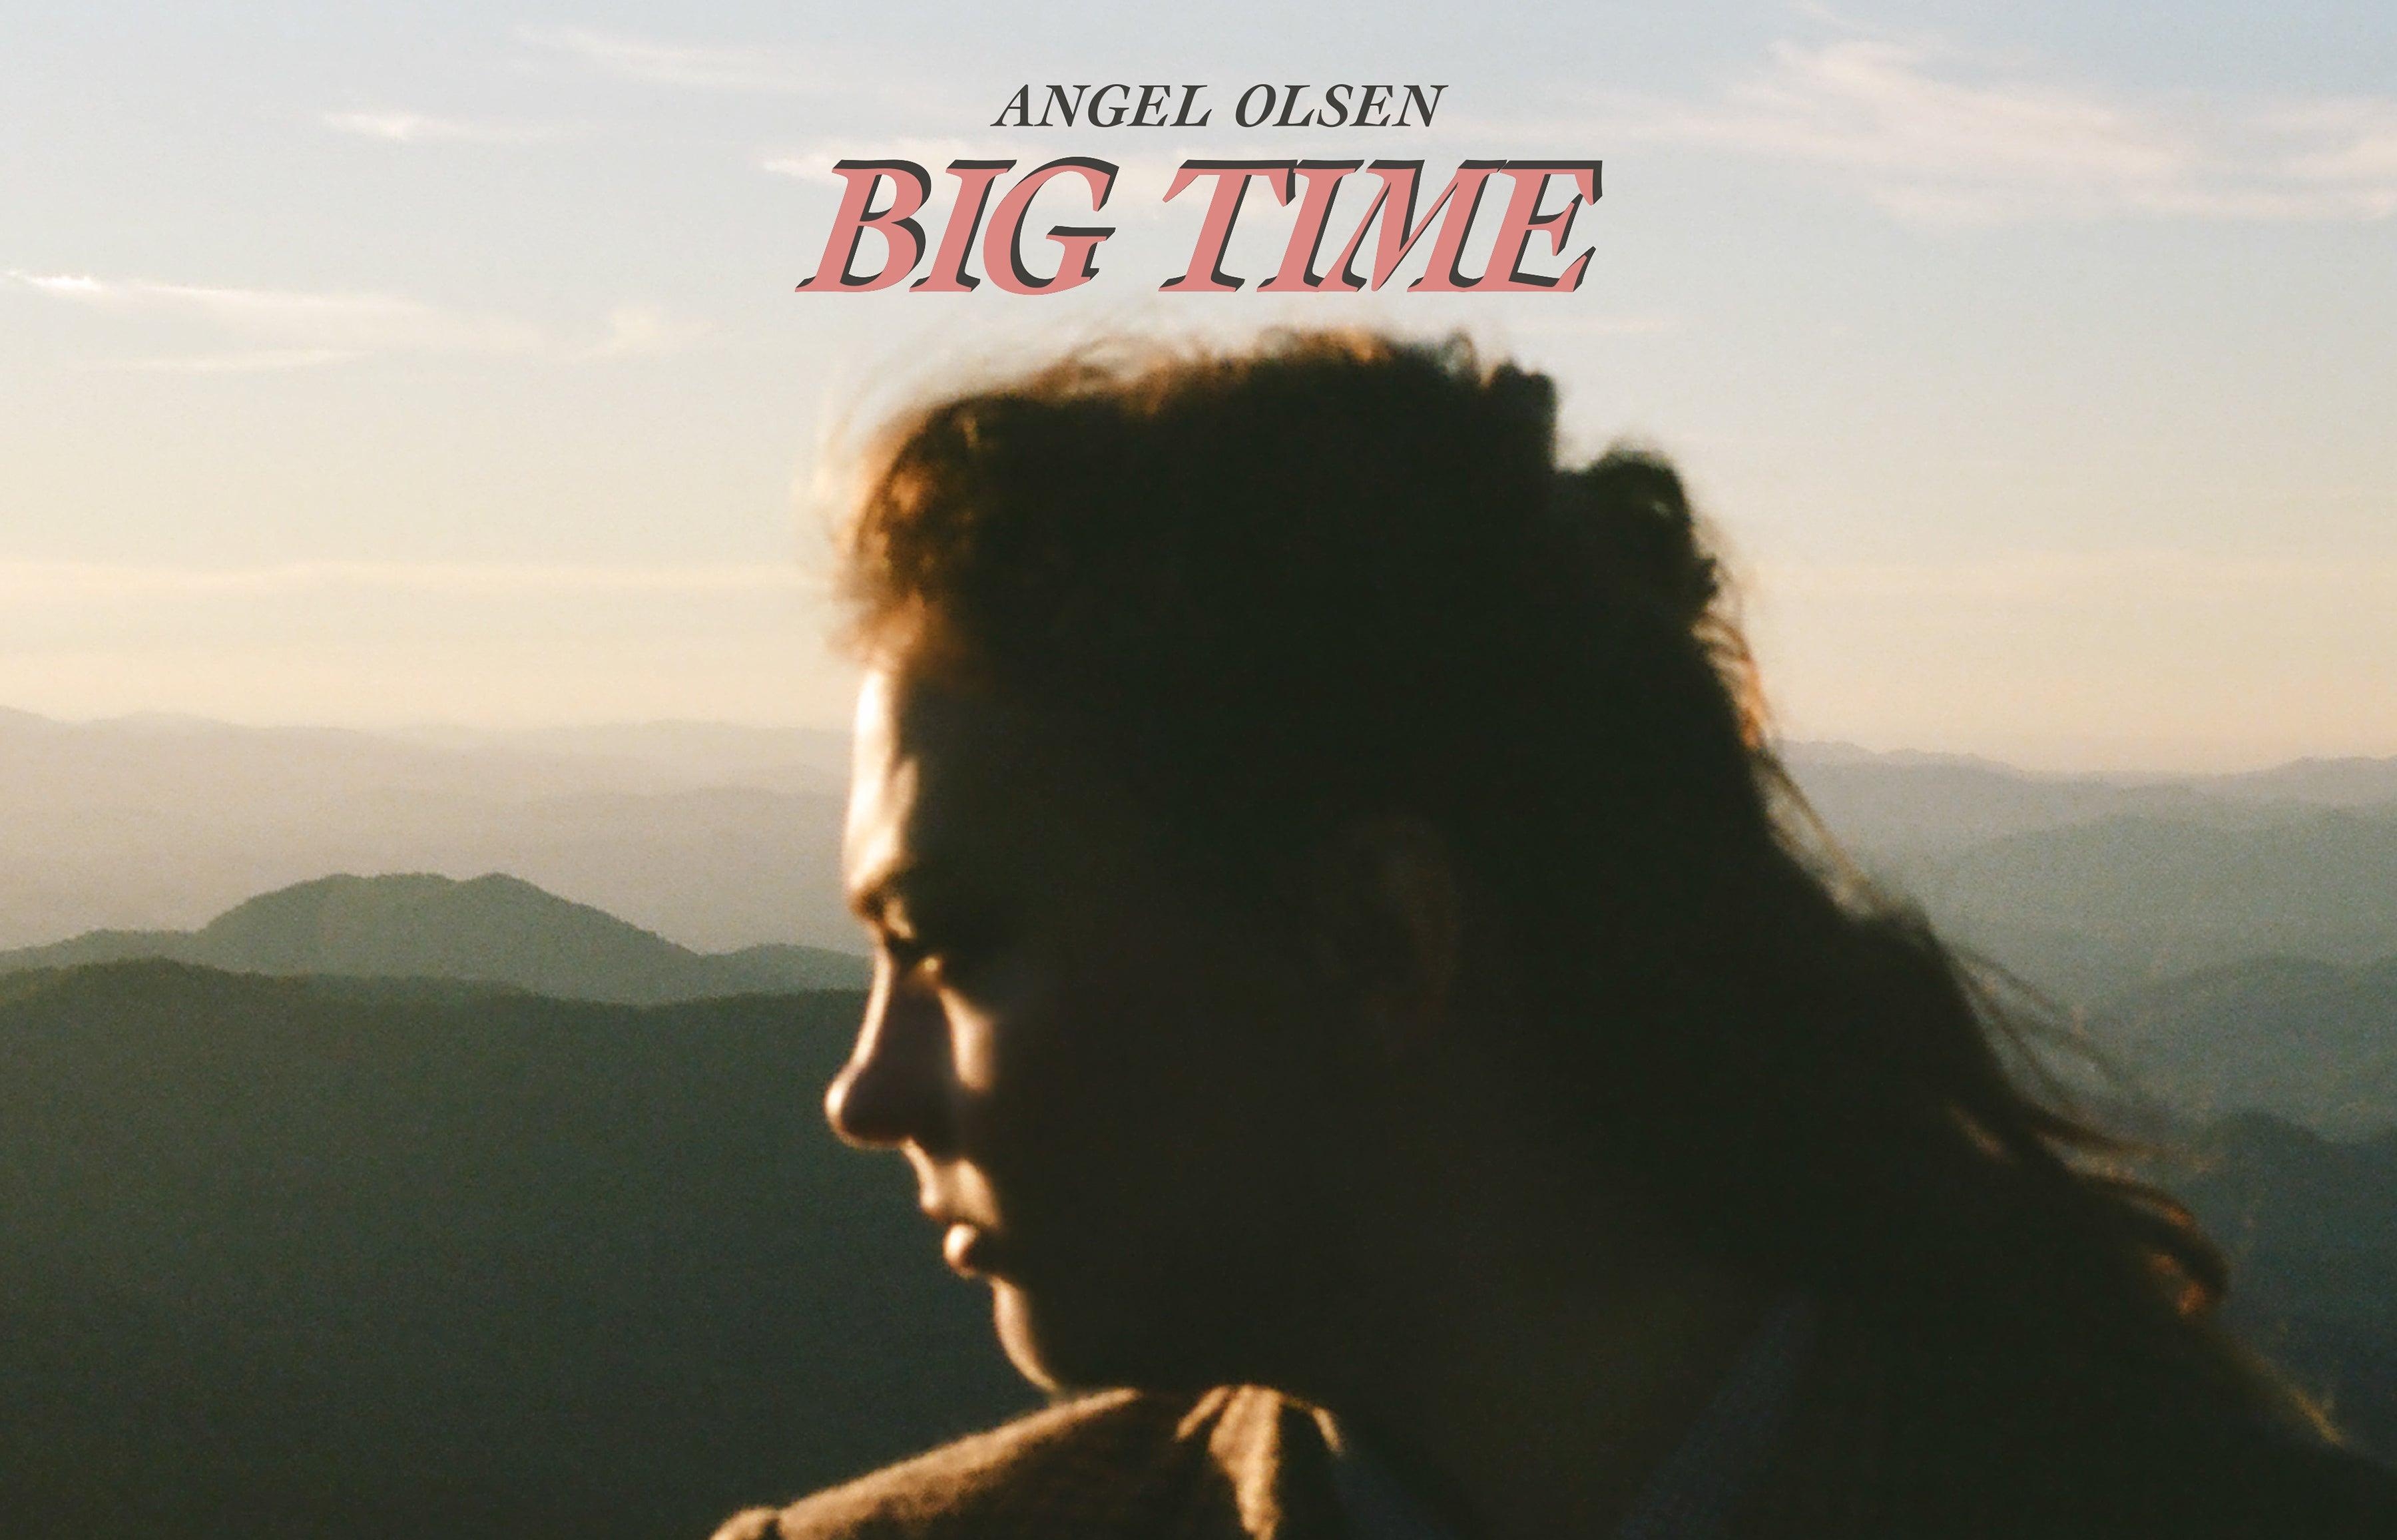 Angel Olsen announces the very queer album we’ve been waiting for